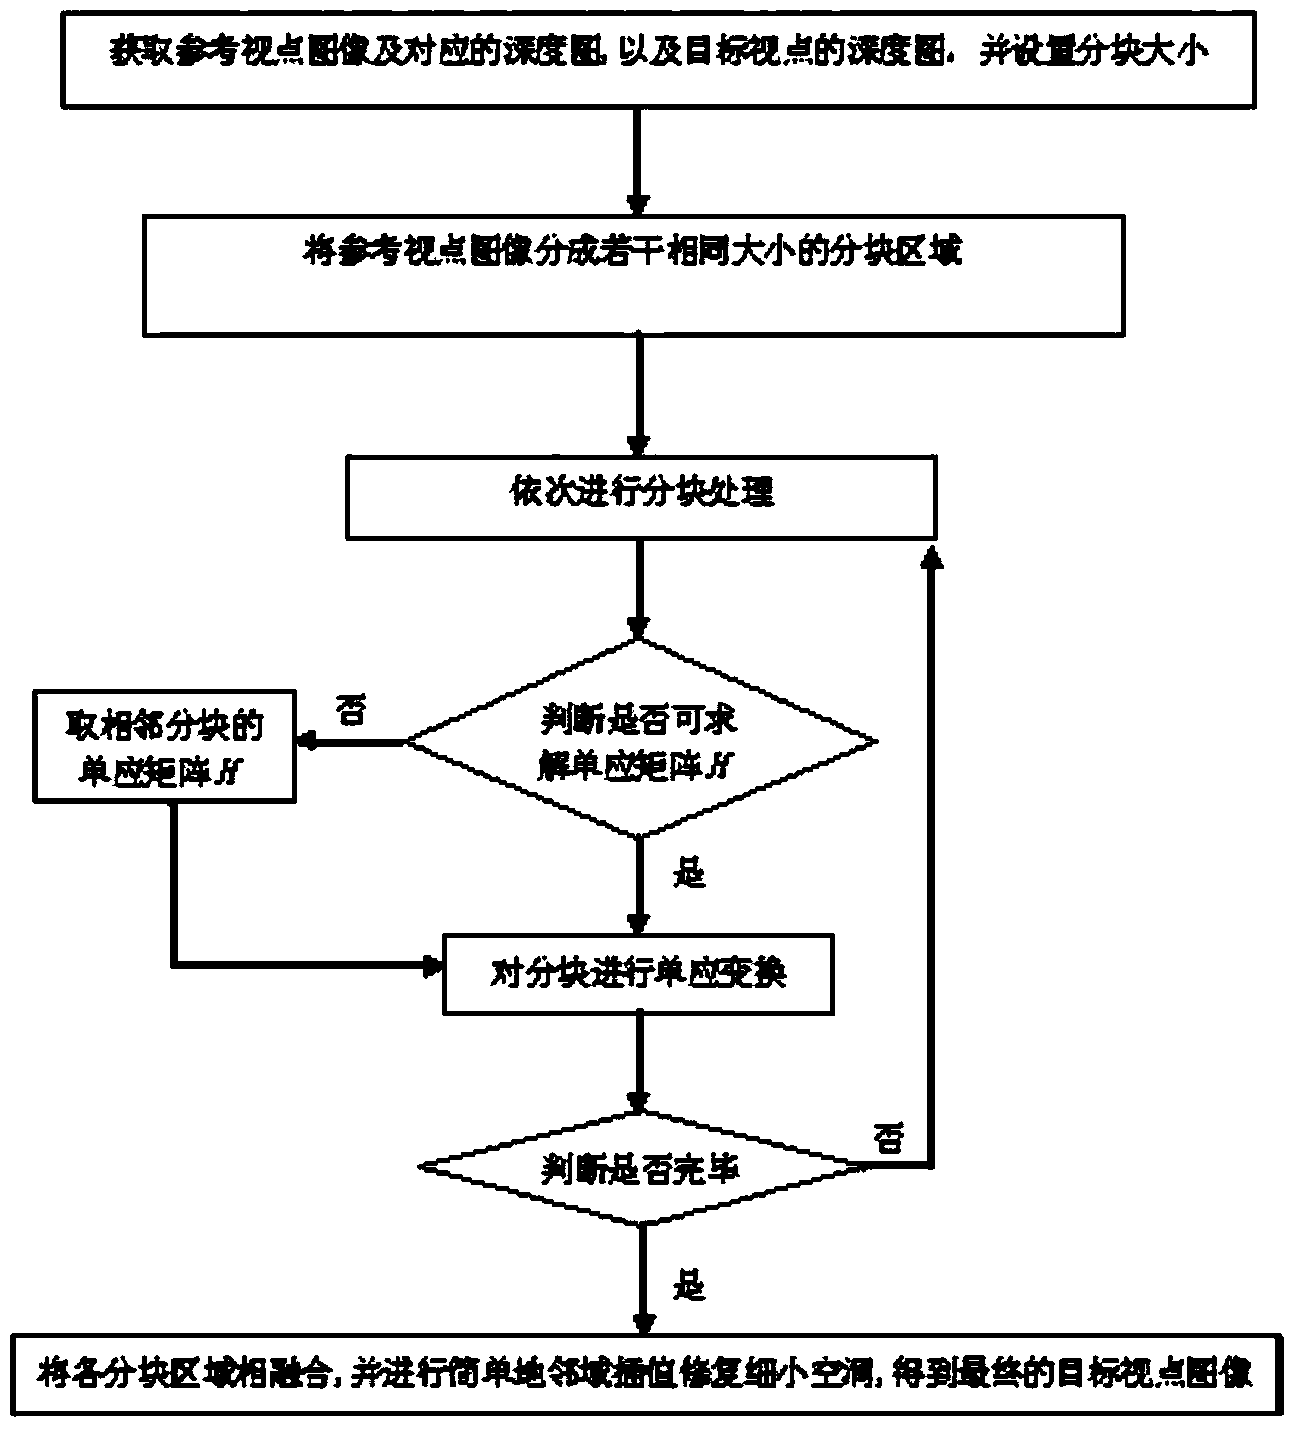 DIBR method based on block projection